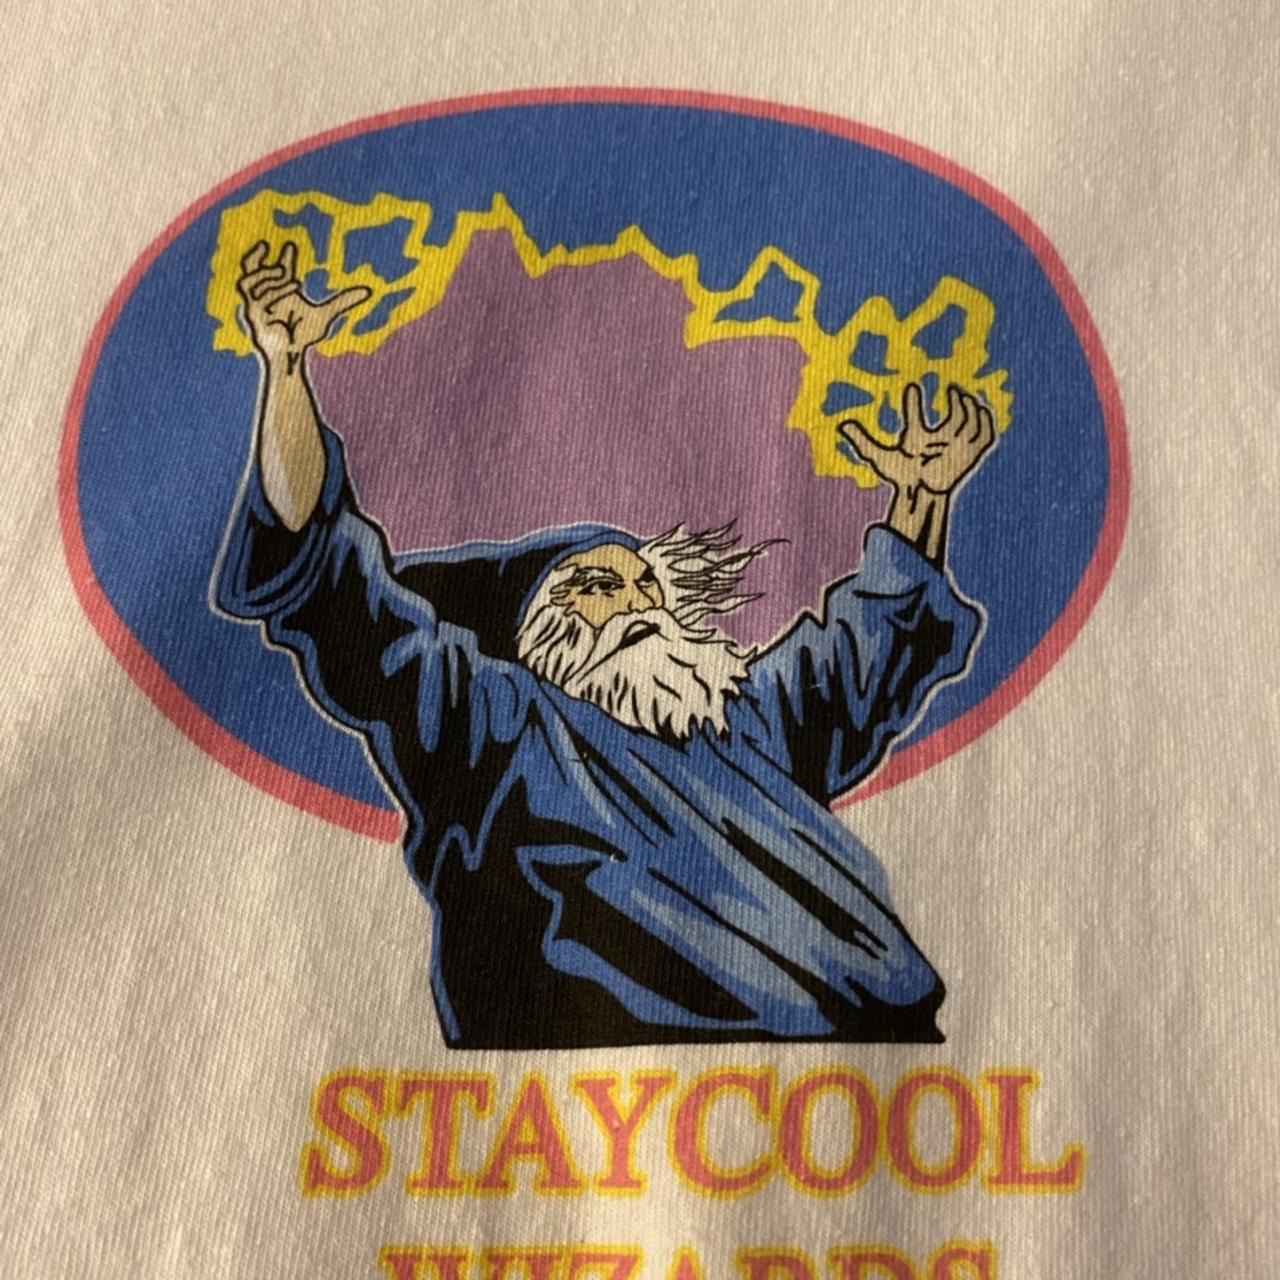 STAY COOL NYC Men's T-shirt (2)